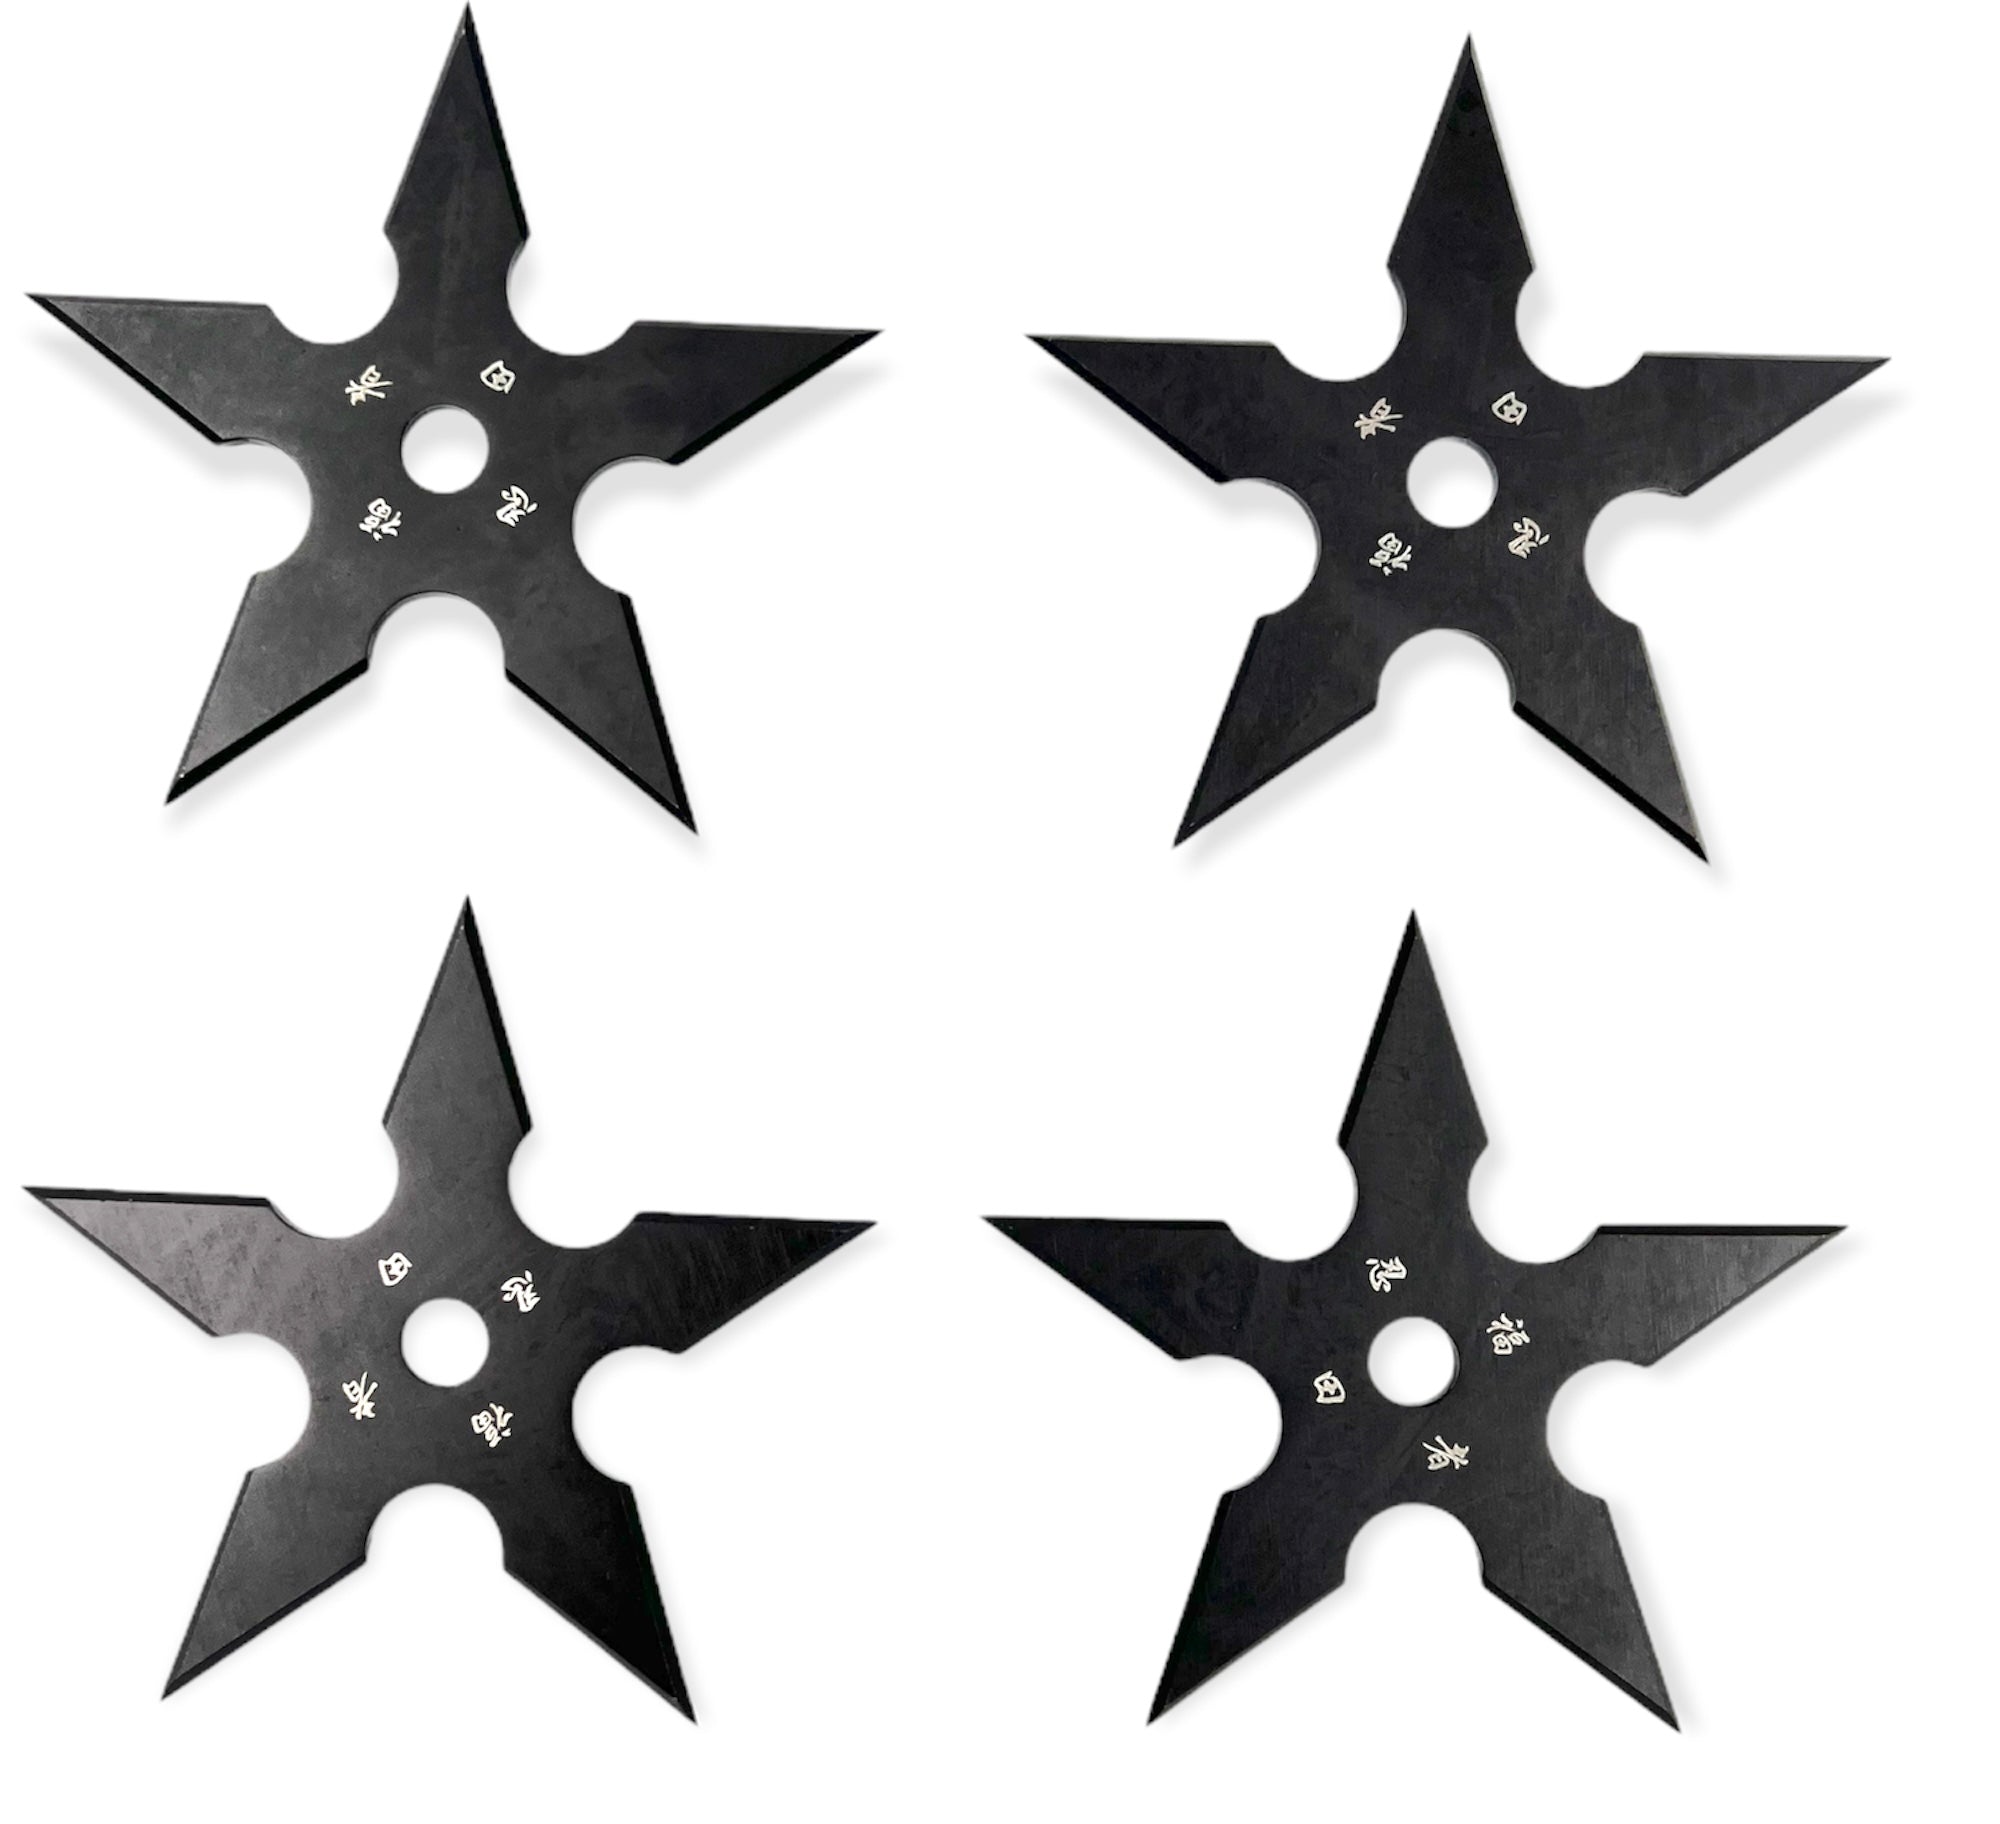 How To Make a Ninja Throwing Star (Shuriken) 